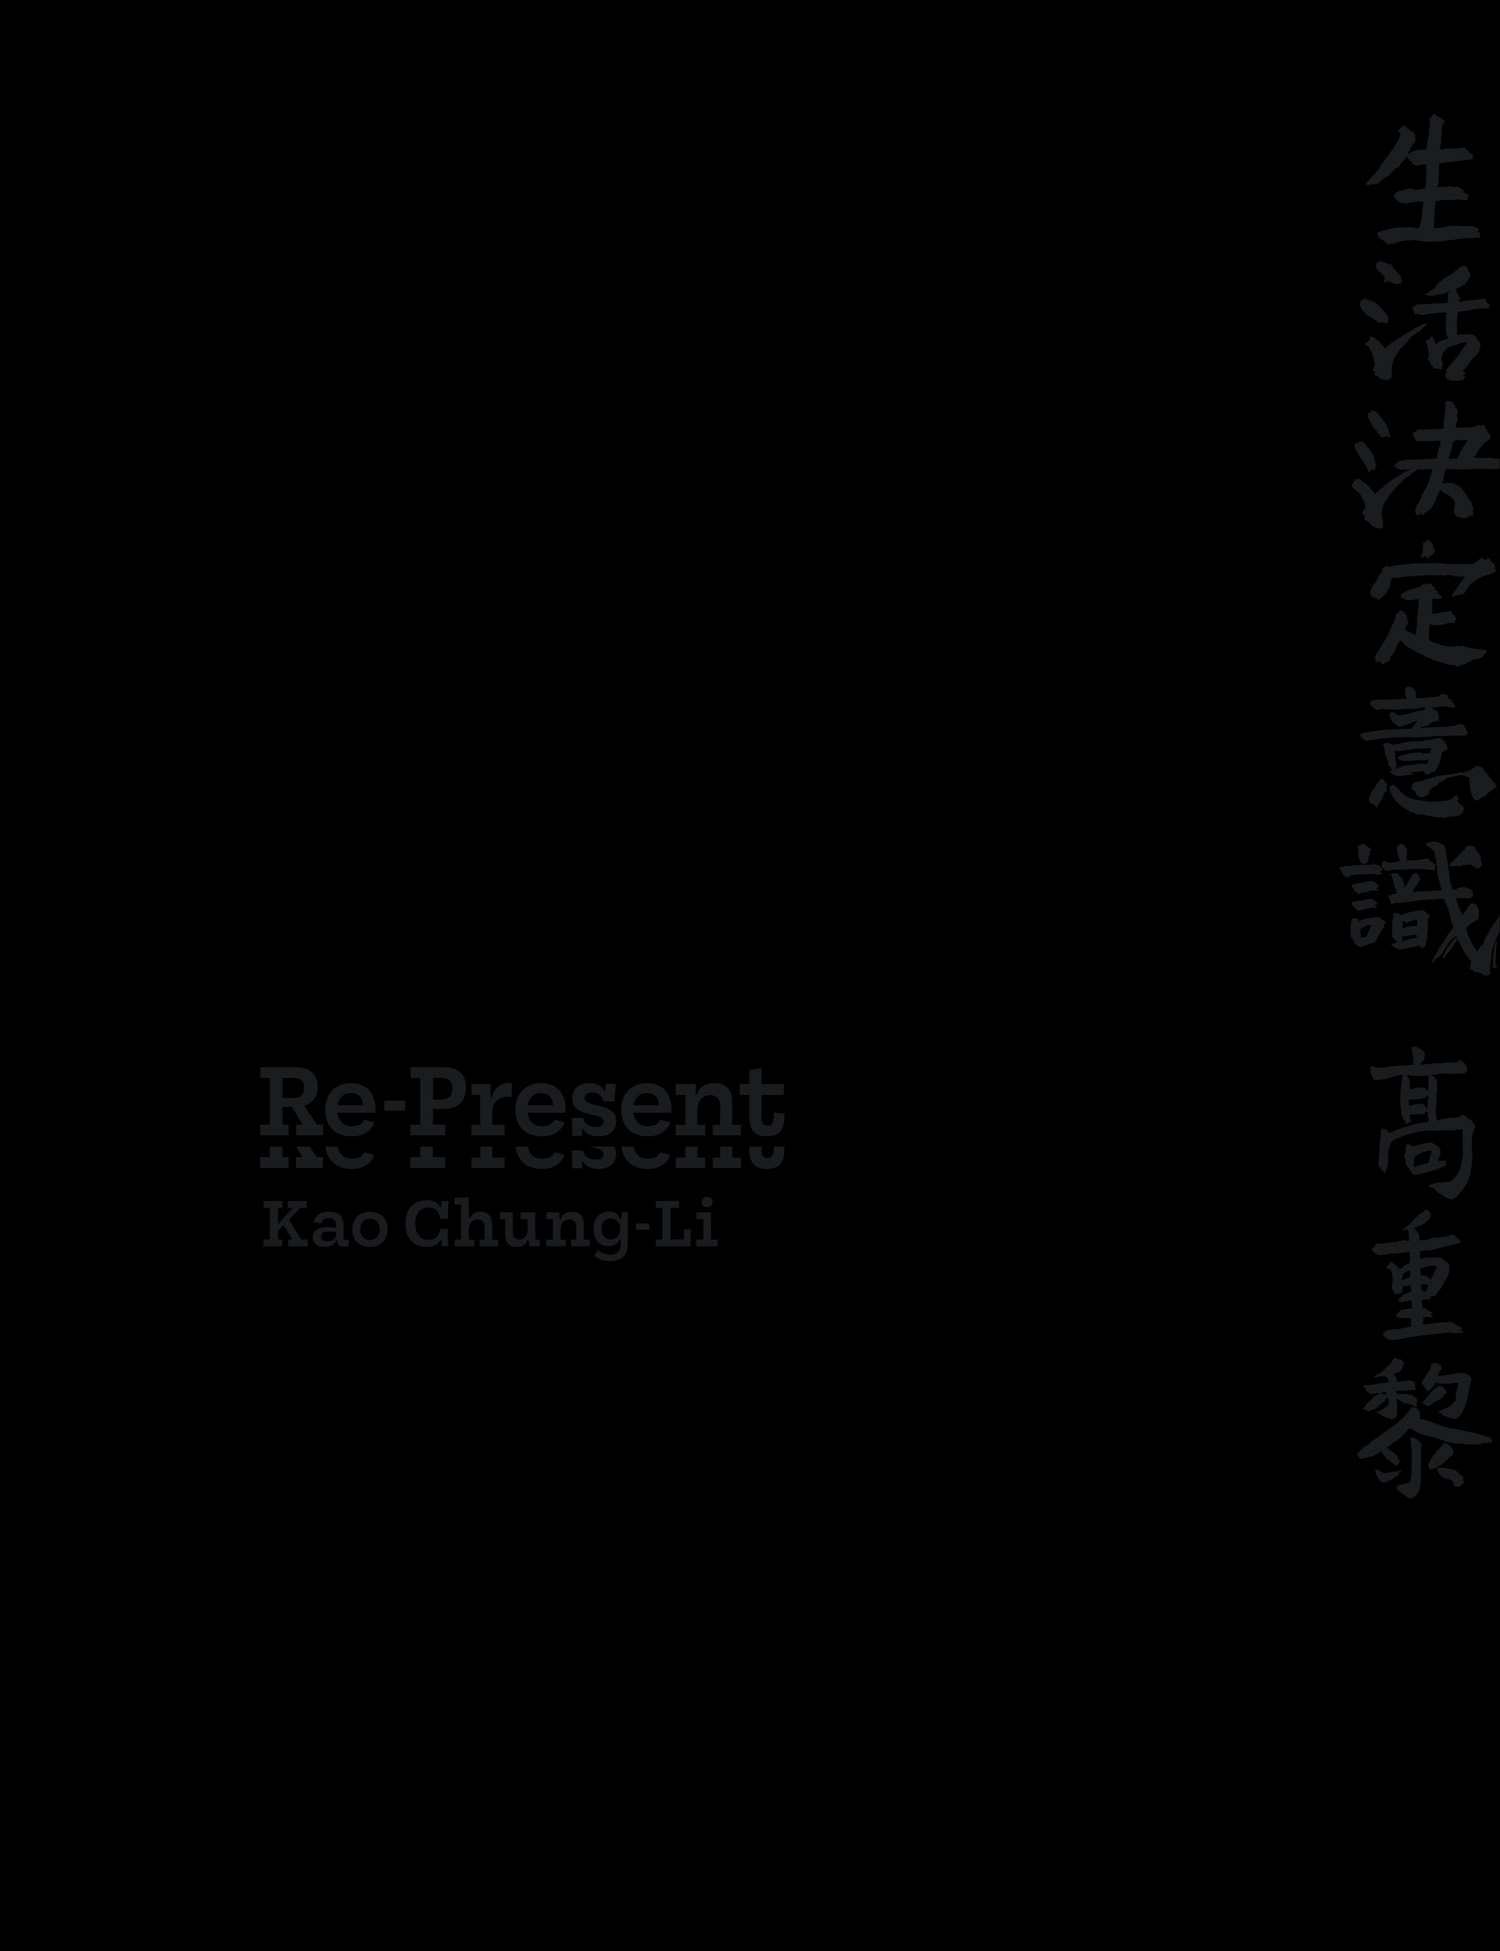 Re-Present: Kao Chung-Li  的圖說